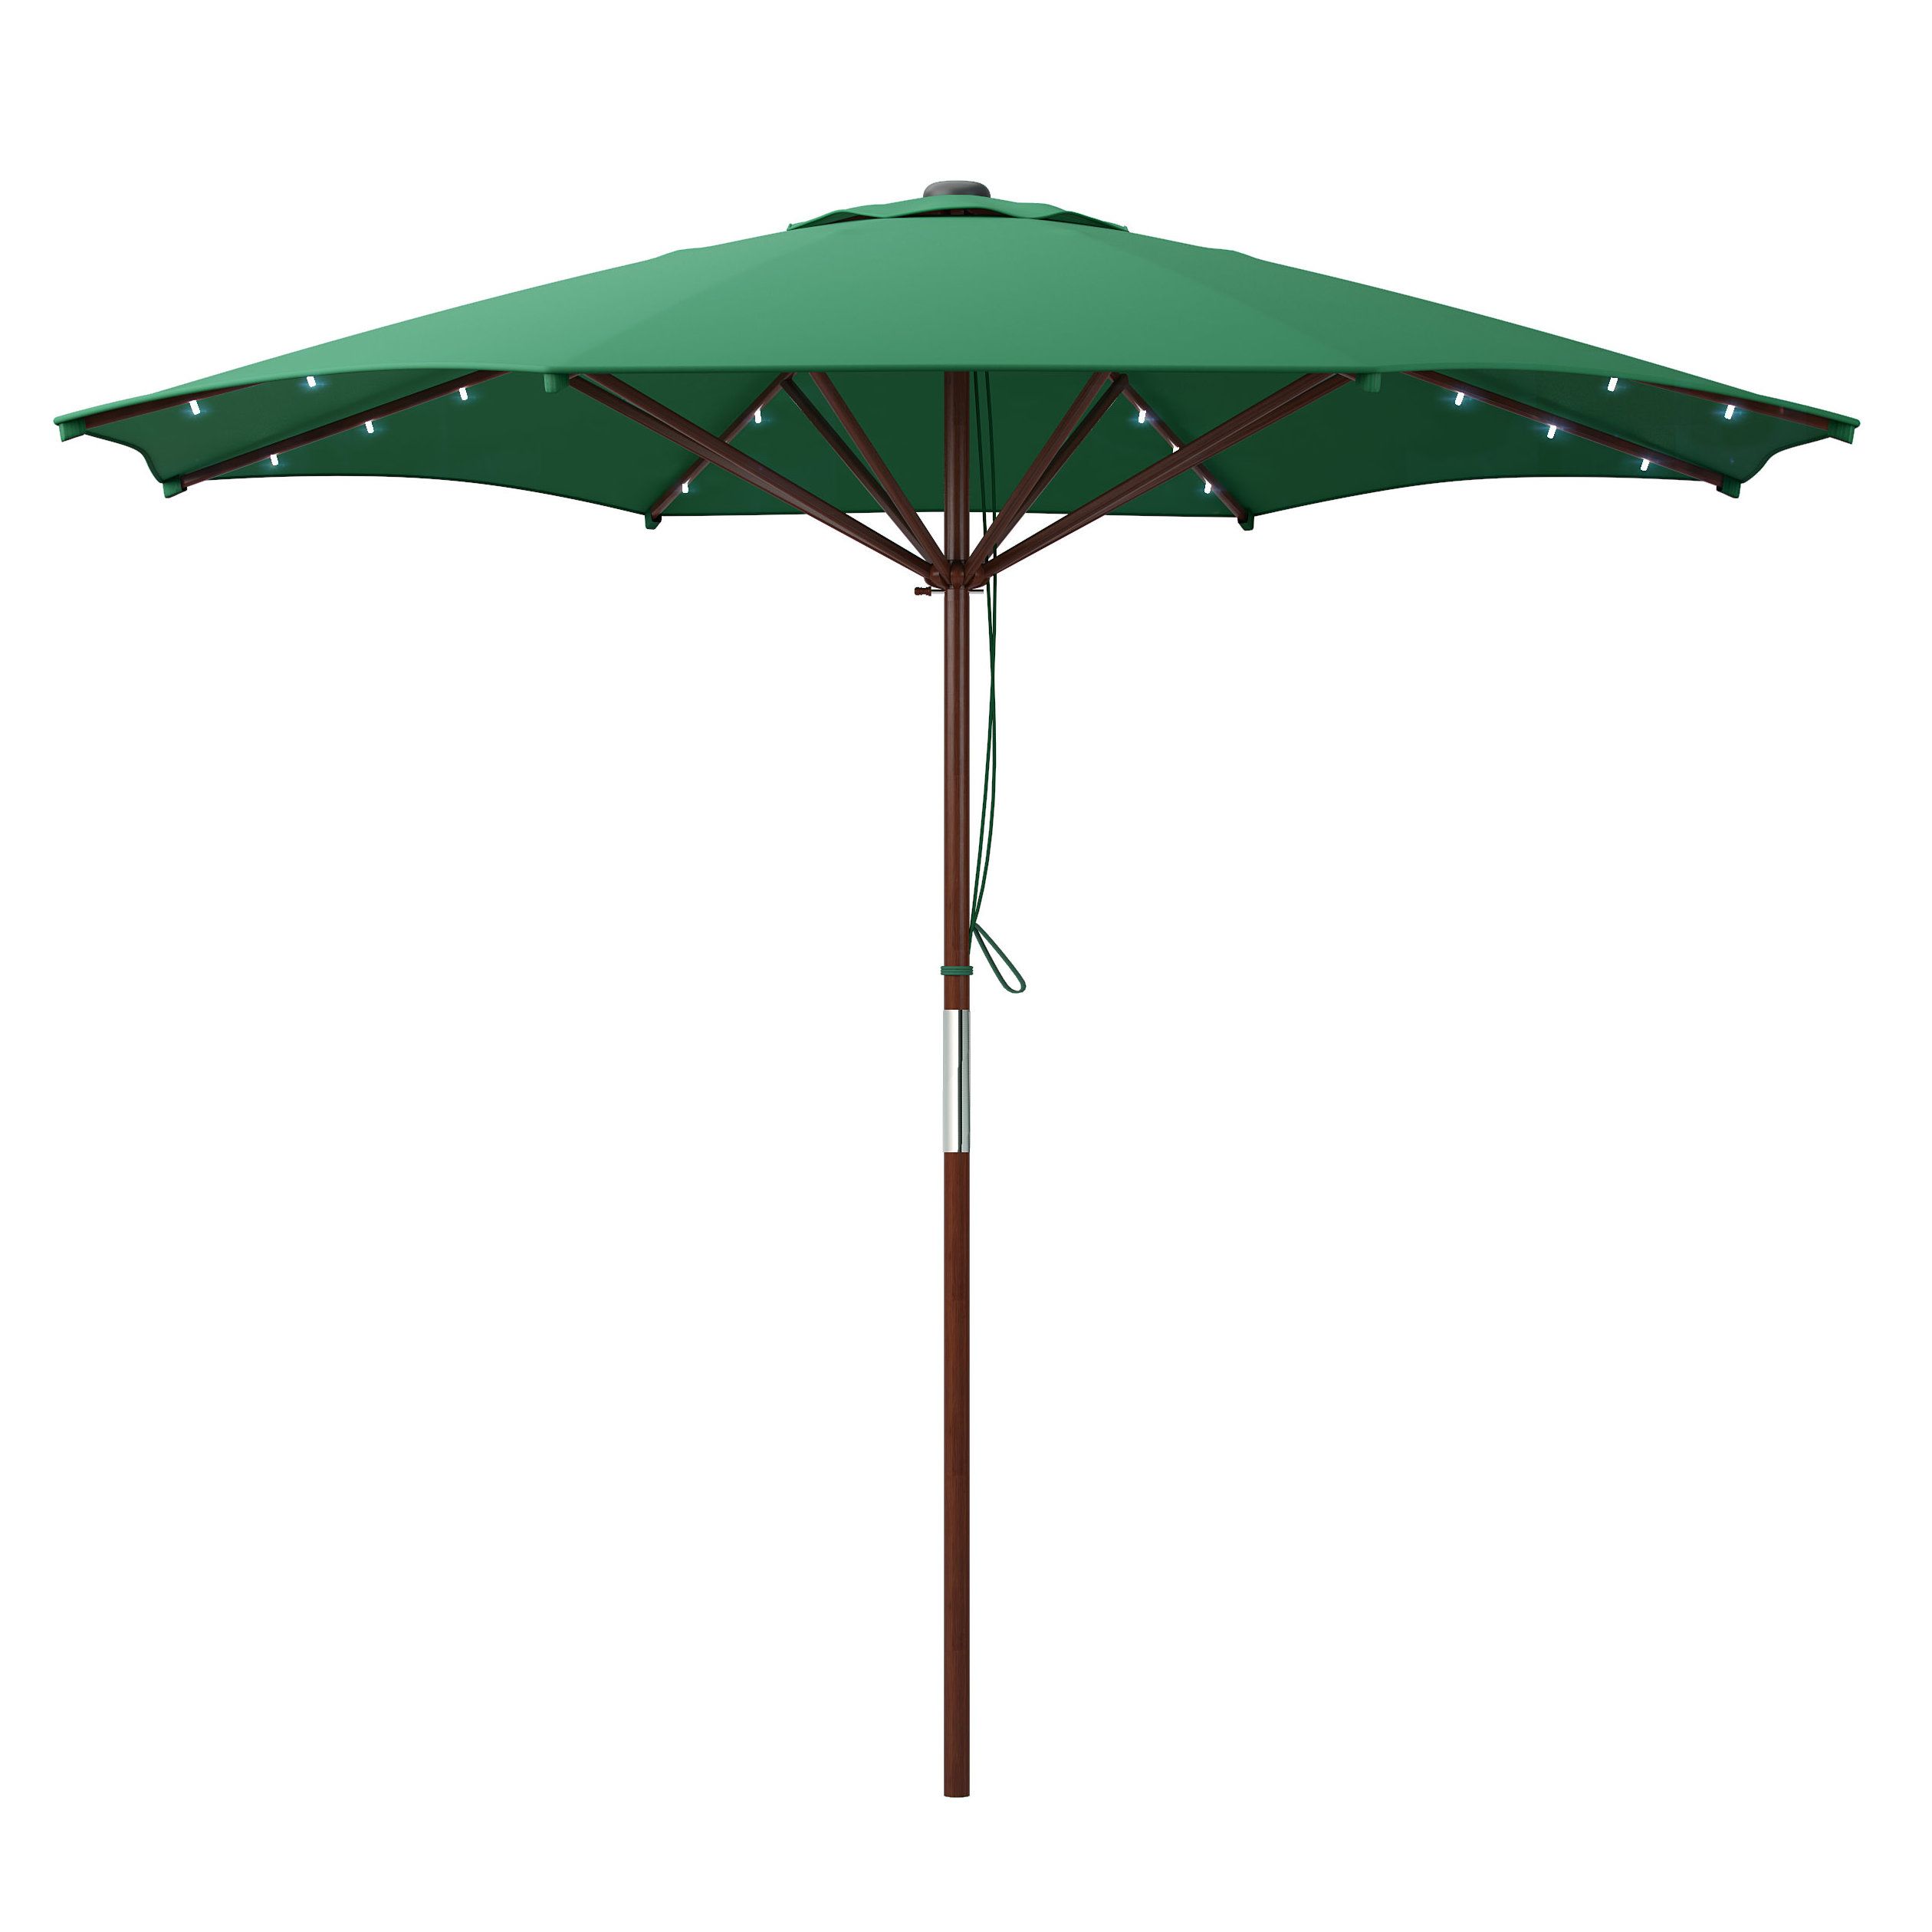 Deforge 9' Illuminated Umbrella Intended For Most Current Markley Market Beach Umbrellas (View 16 of 20)